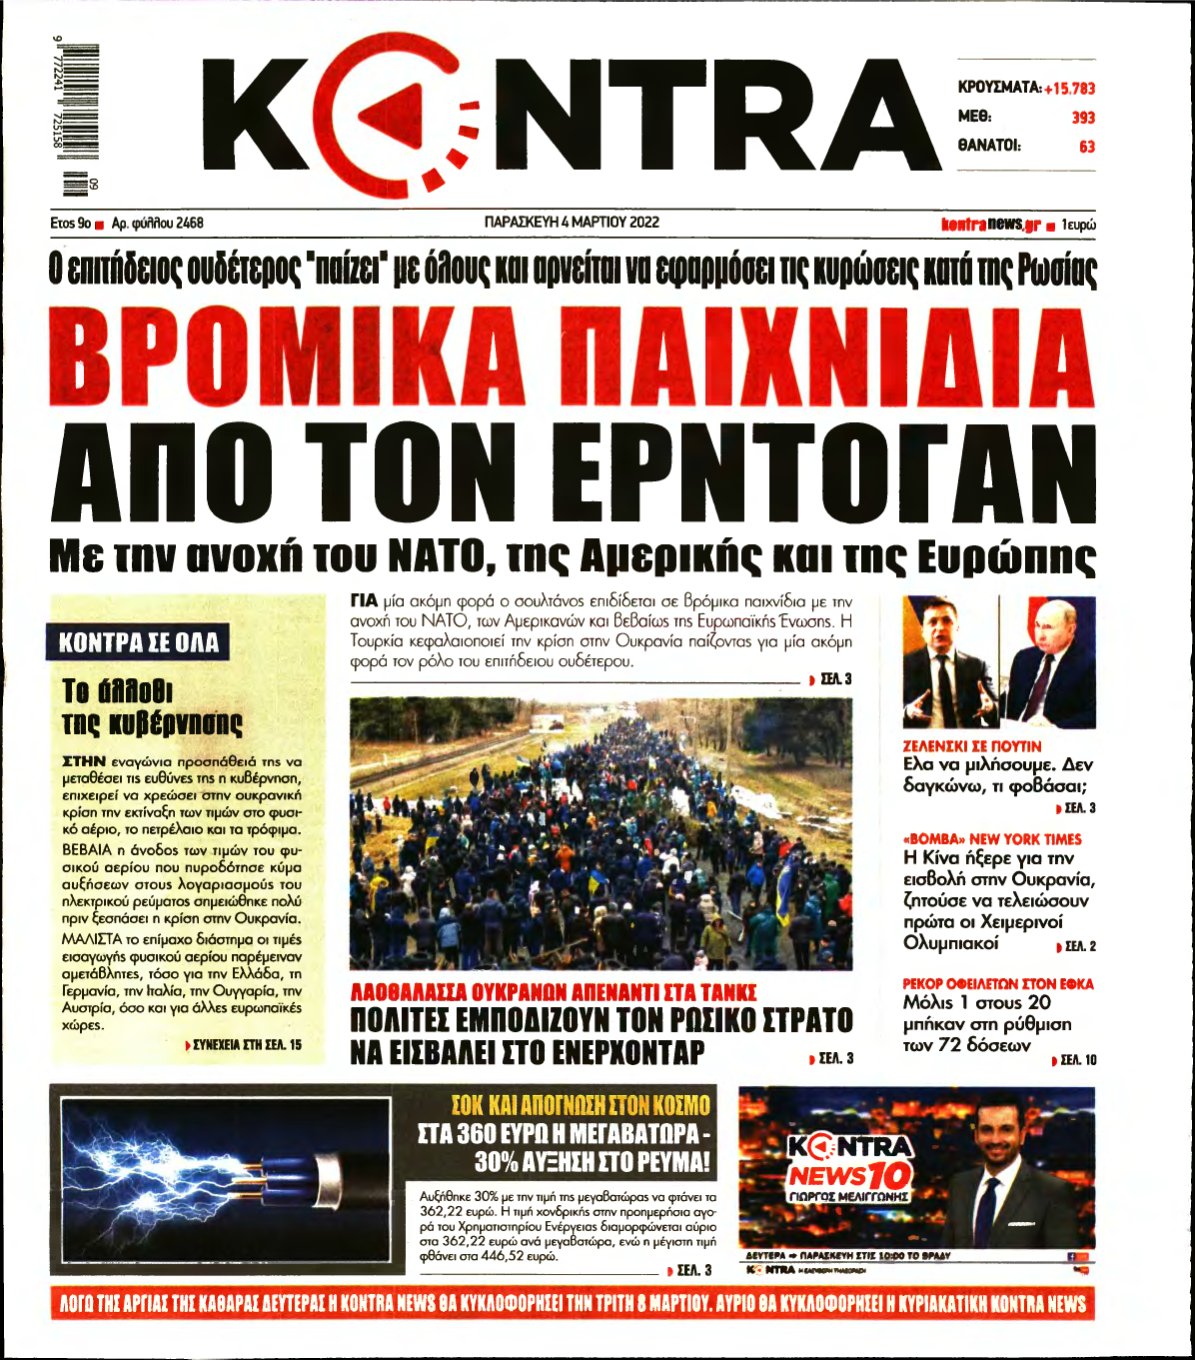 KONTRA NEWS – 04/03/2022